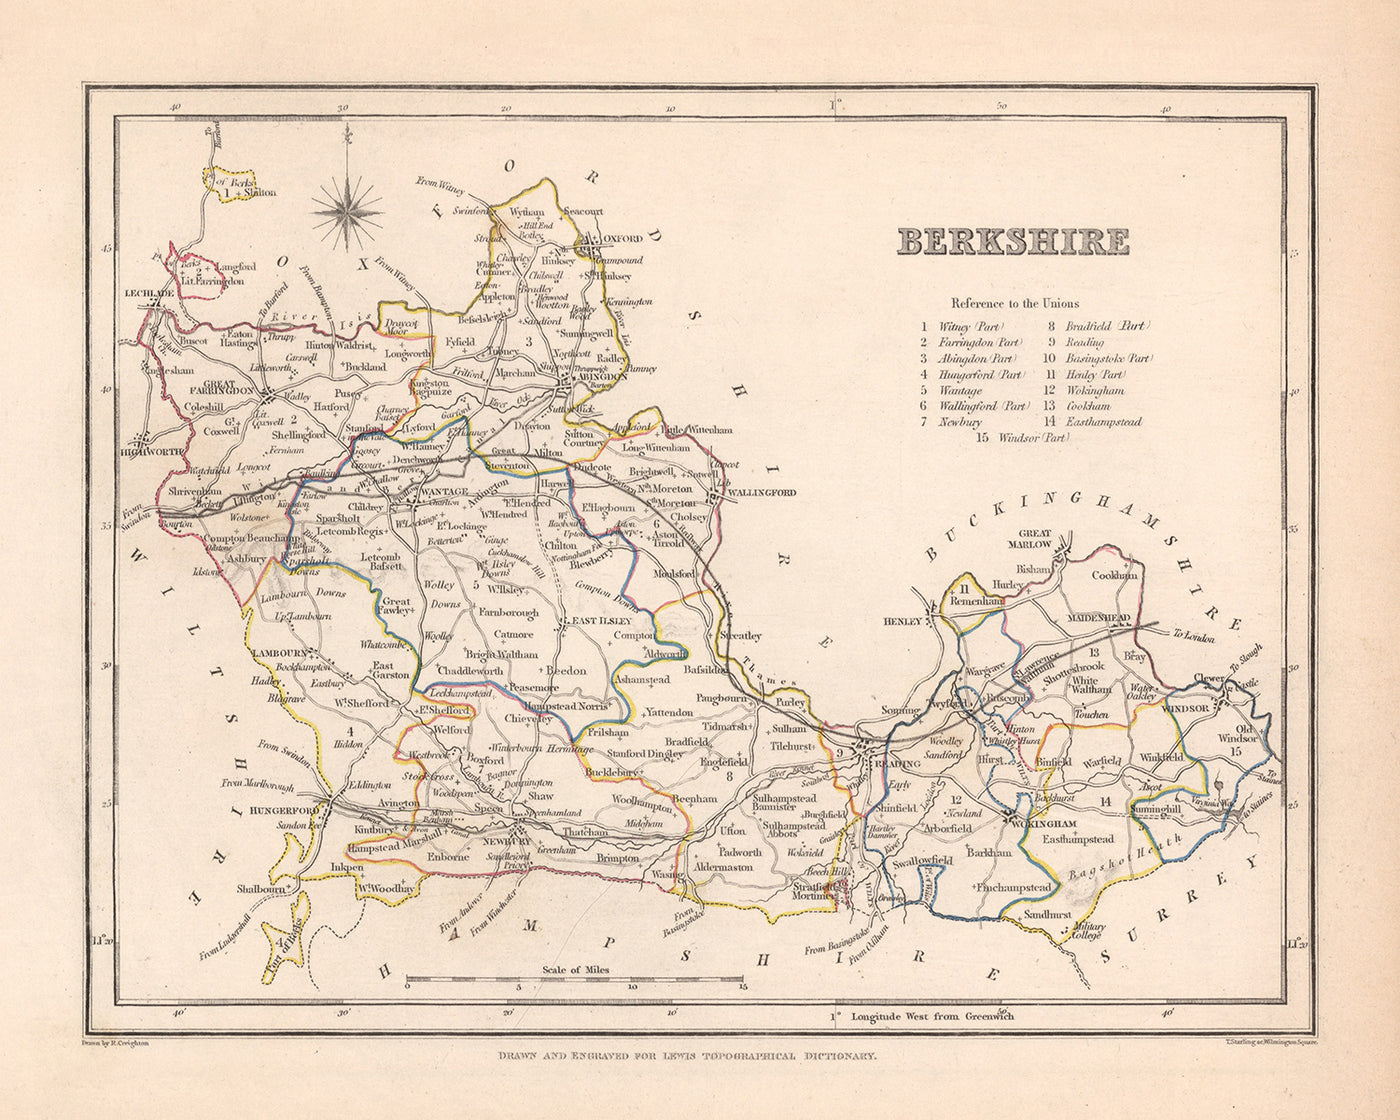 Ancienne carte du Berkshire par Samuel Lewis, 1844 : Reading, Windsor, Newbury, Abingdon et Henley-on-Thames